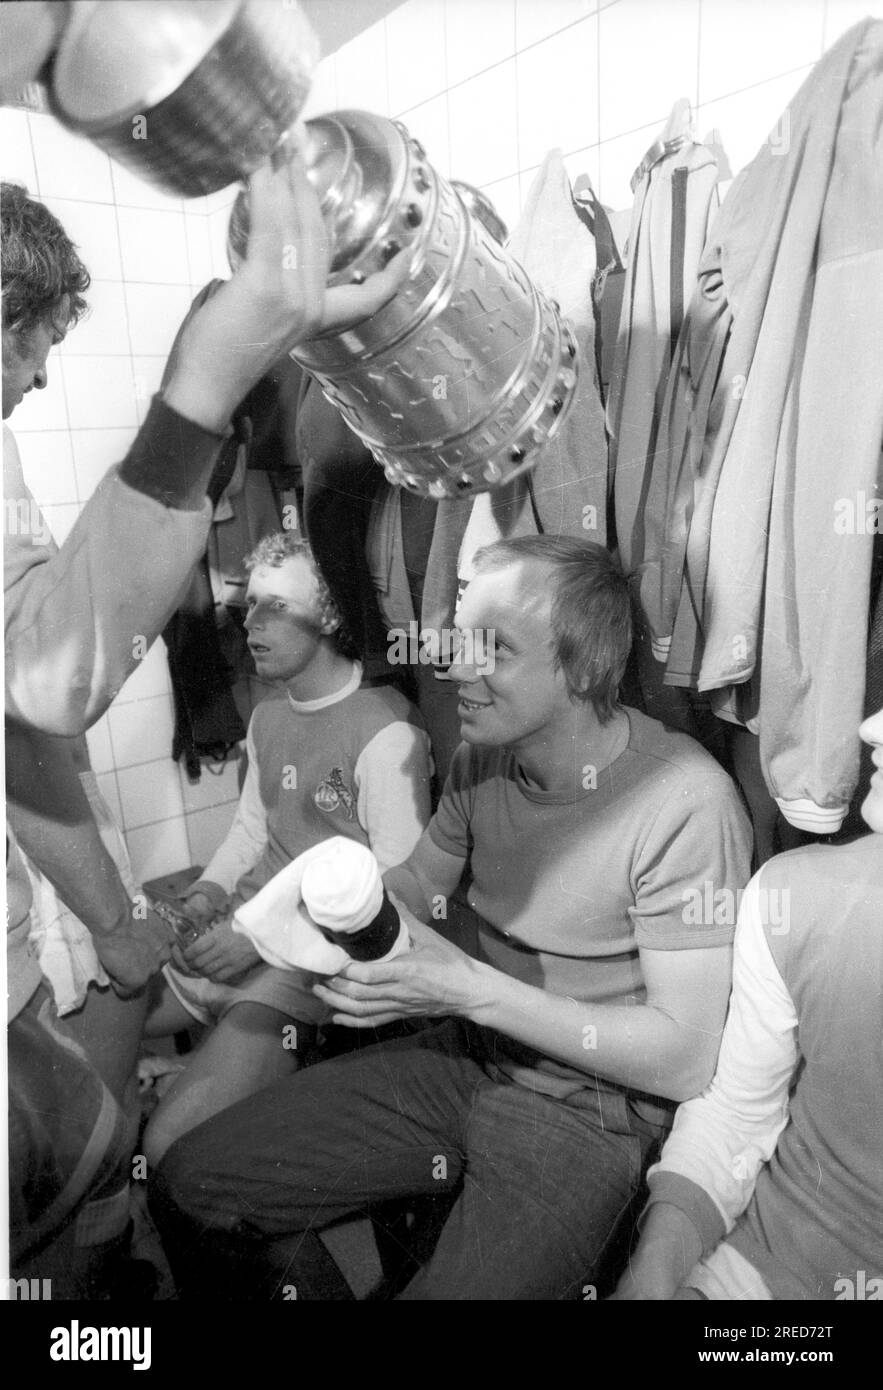 DFB Cup Final 1973: Borussia Mönchengladbach - 1. FC Köln 2:1 / Hans-Jürgen Wittkamp (Borussia) receives the cup, Bert Vogts on the left [automated translation] Stock Photo